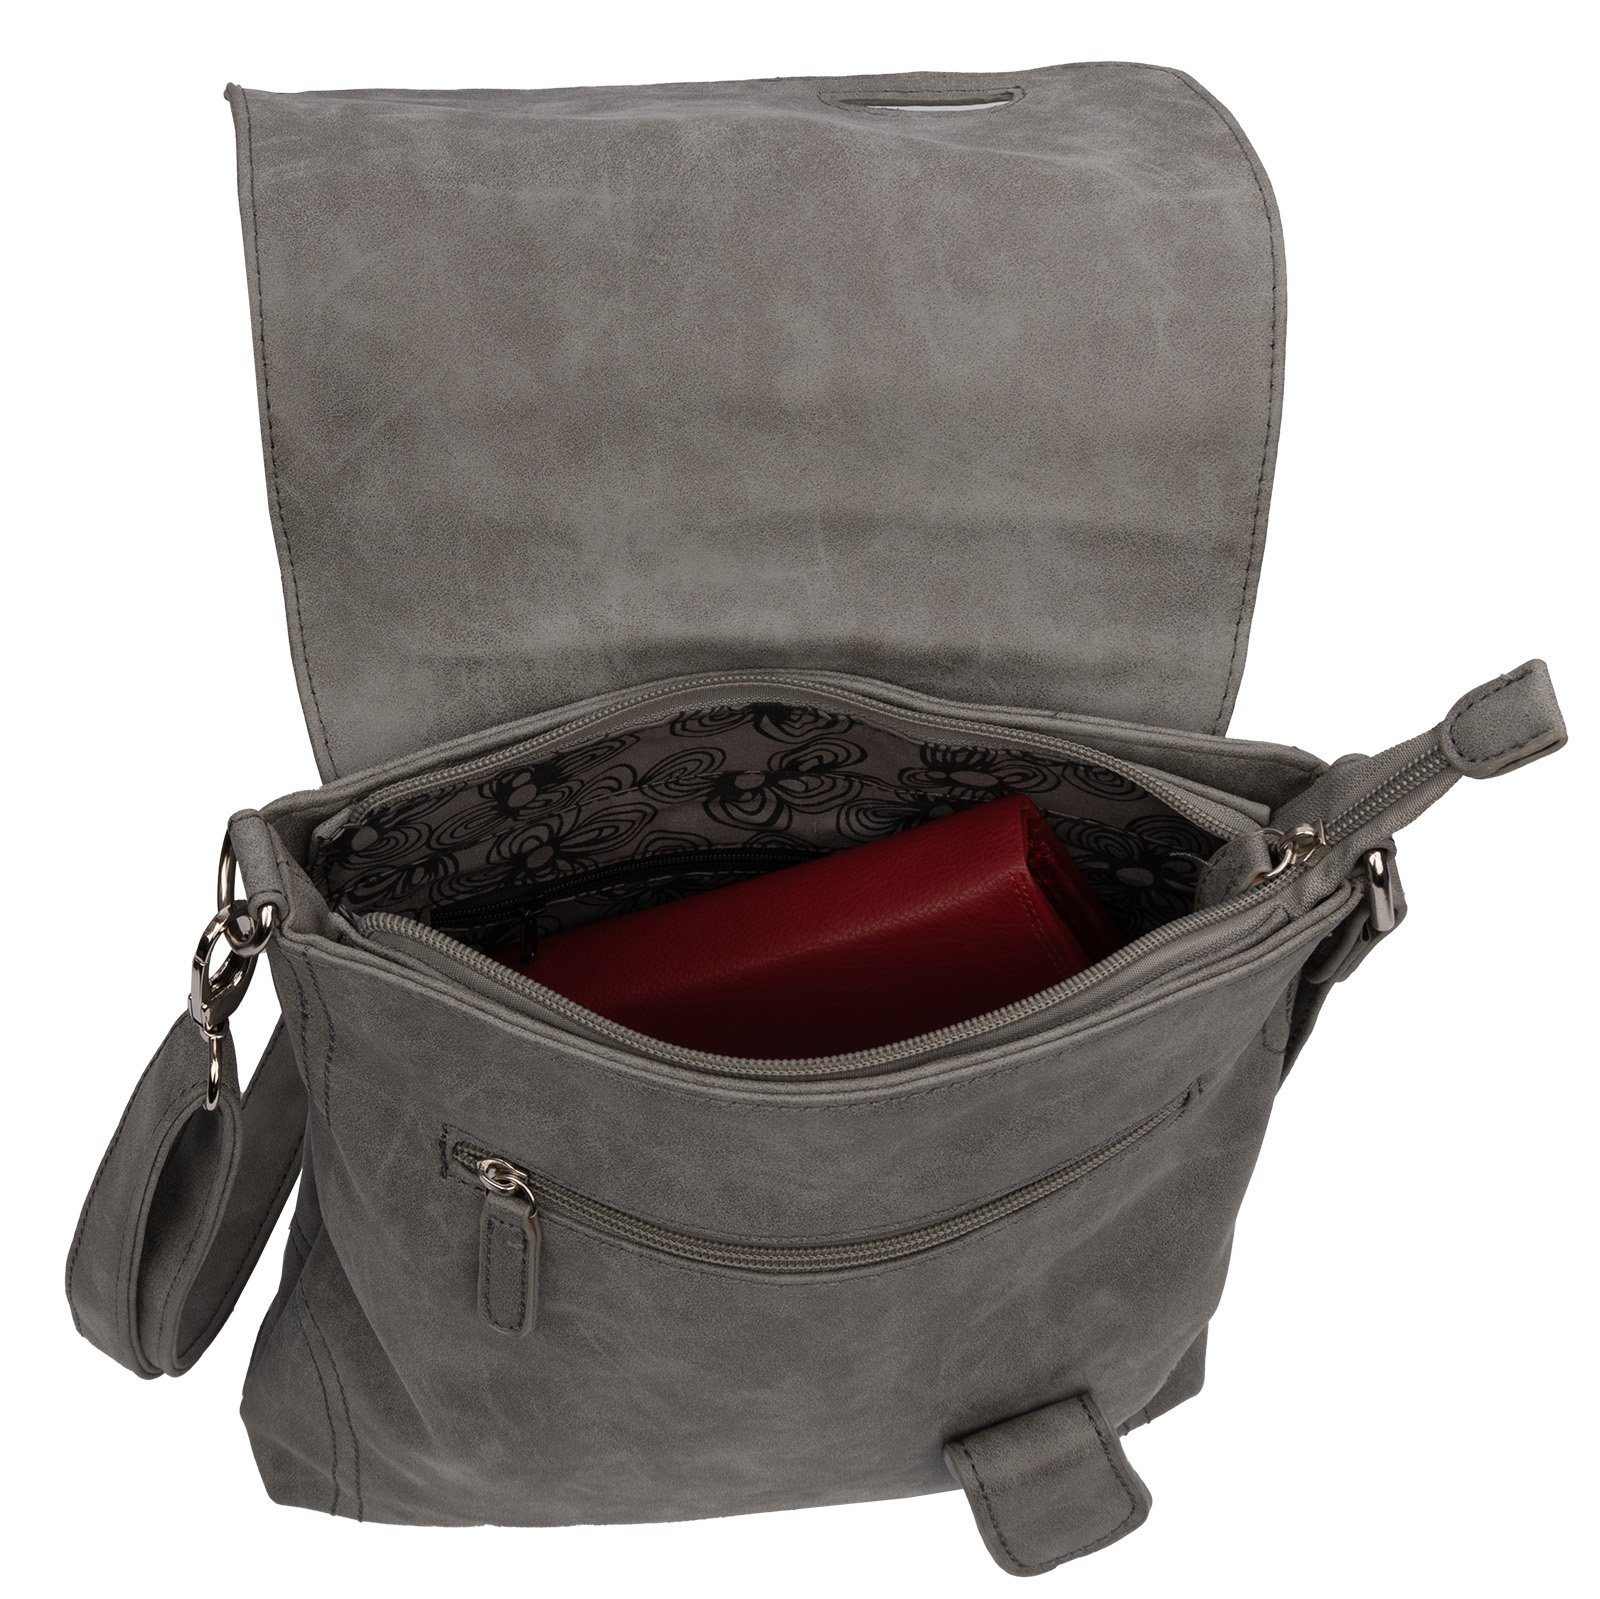 Damentasche BAG Bag Street tragbar Schultertasche T0104, Schlüsseltasche Umhängetasche als Schultertasche, STREET Umhängetasche Handtasche GRAU